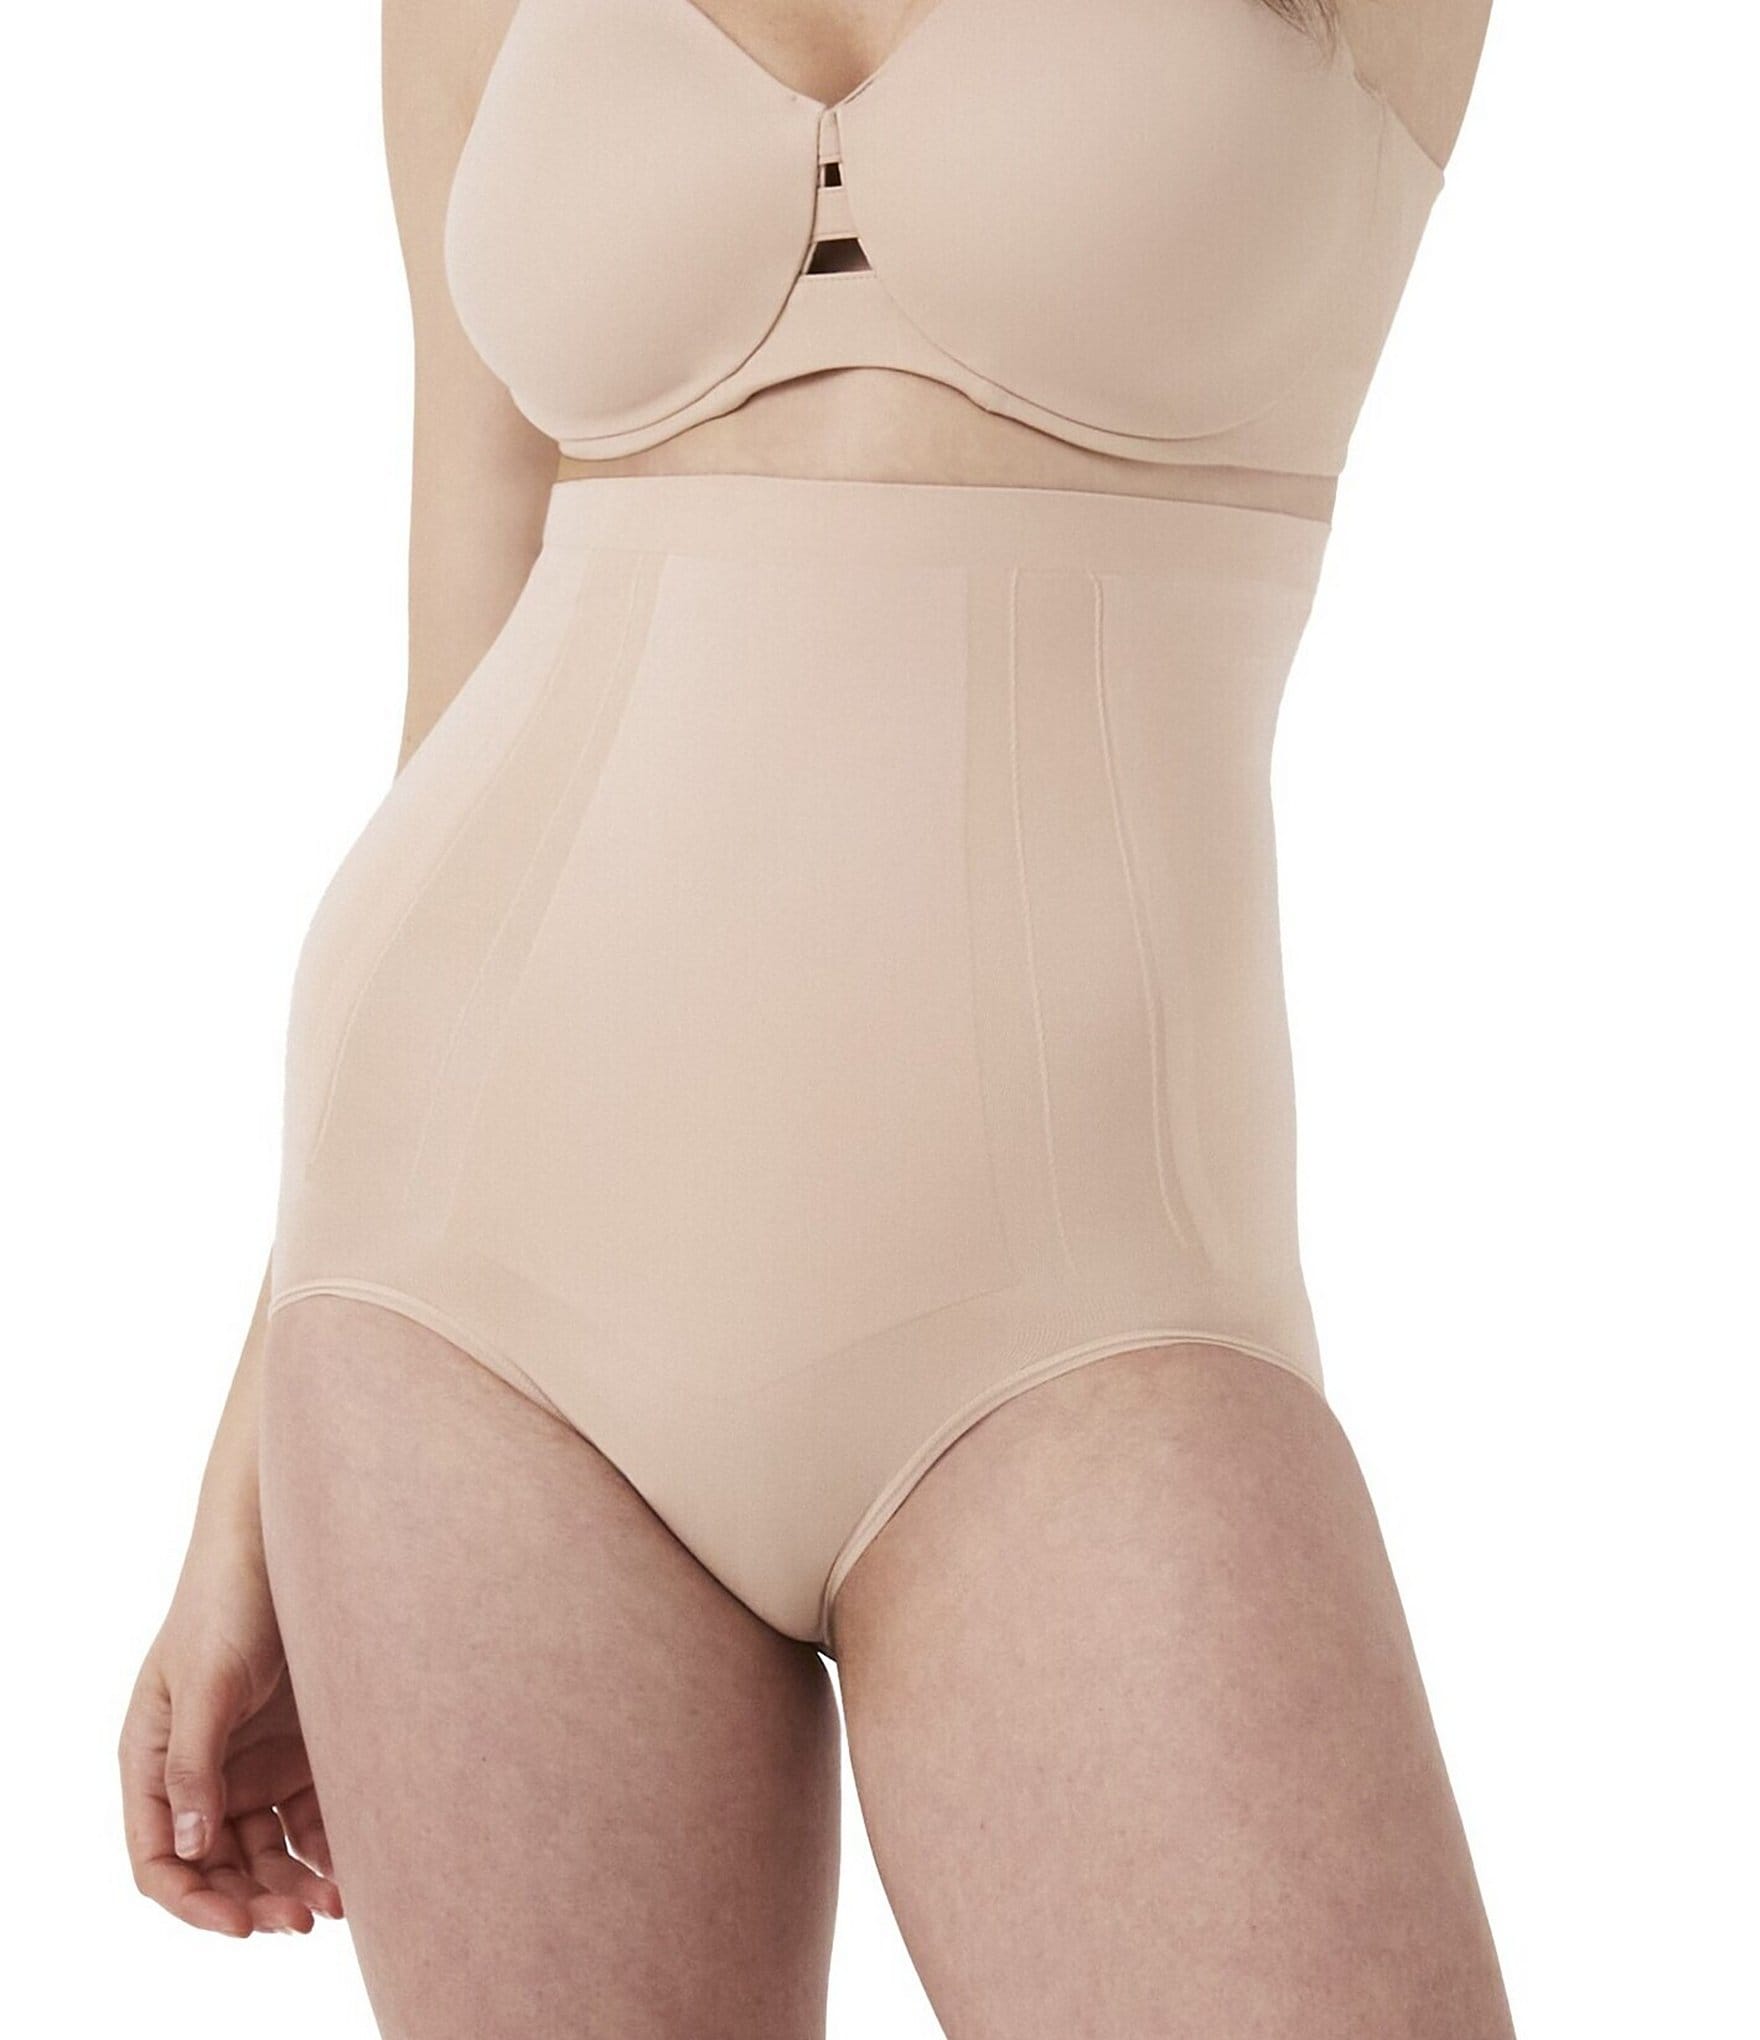 SPANX, Intimates & Sleepwear, Spanx Bra 38c Nude Excellent Condition